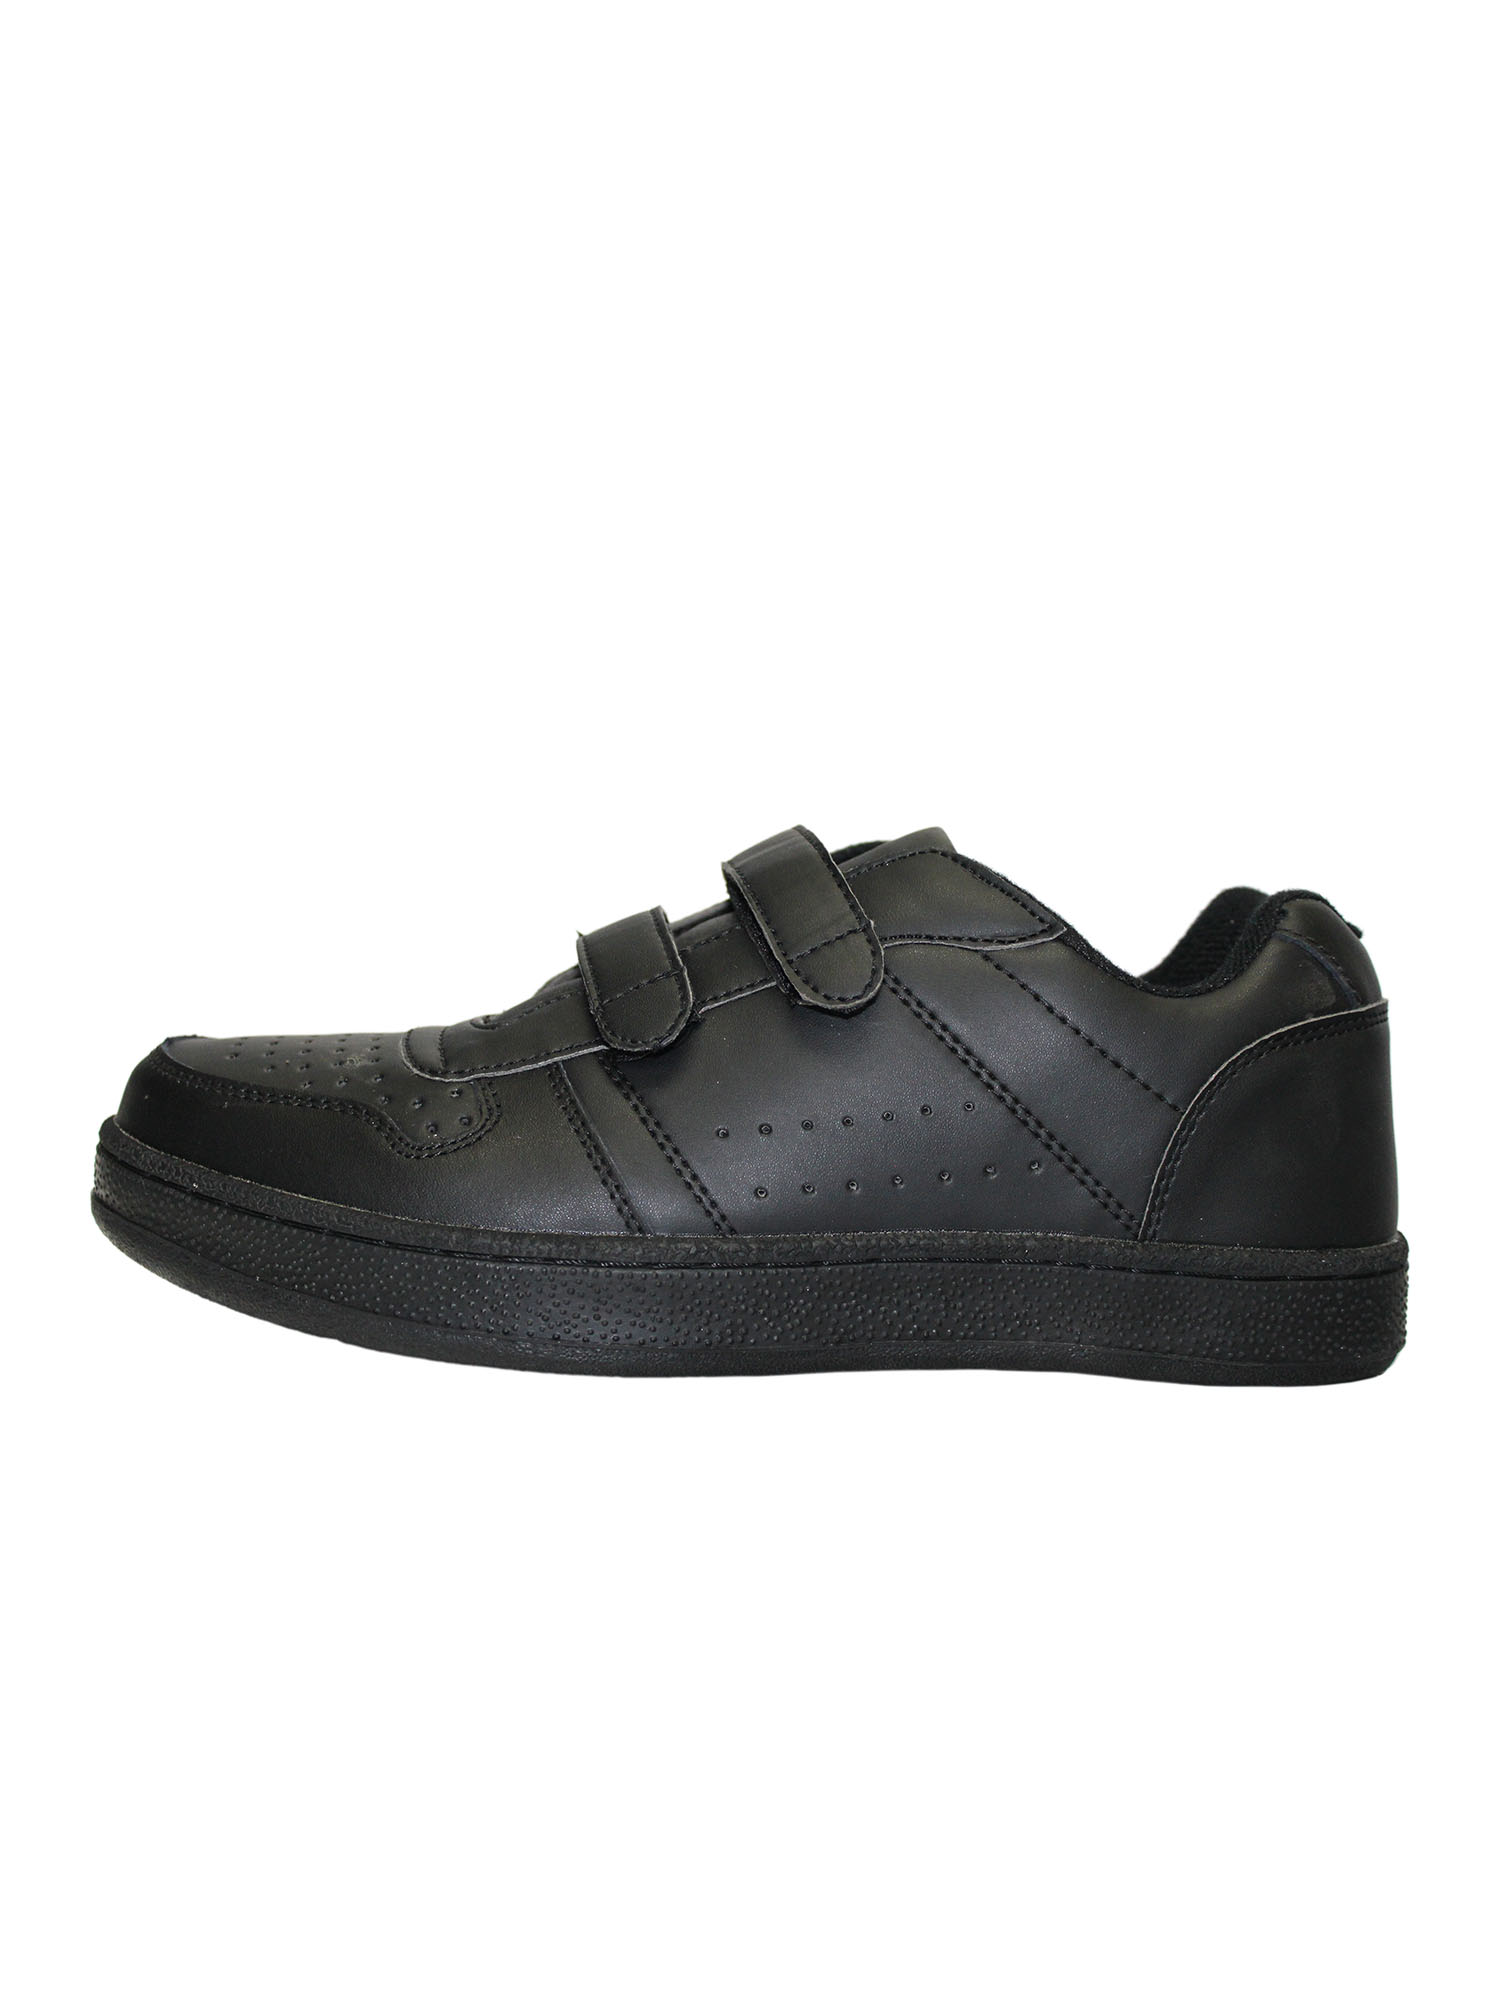 Tanleewa Men's Leather Strap Sneakers Lightweight Hook and Loop Walking Shoe Size 5 Adult Male - image 2 of 4